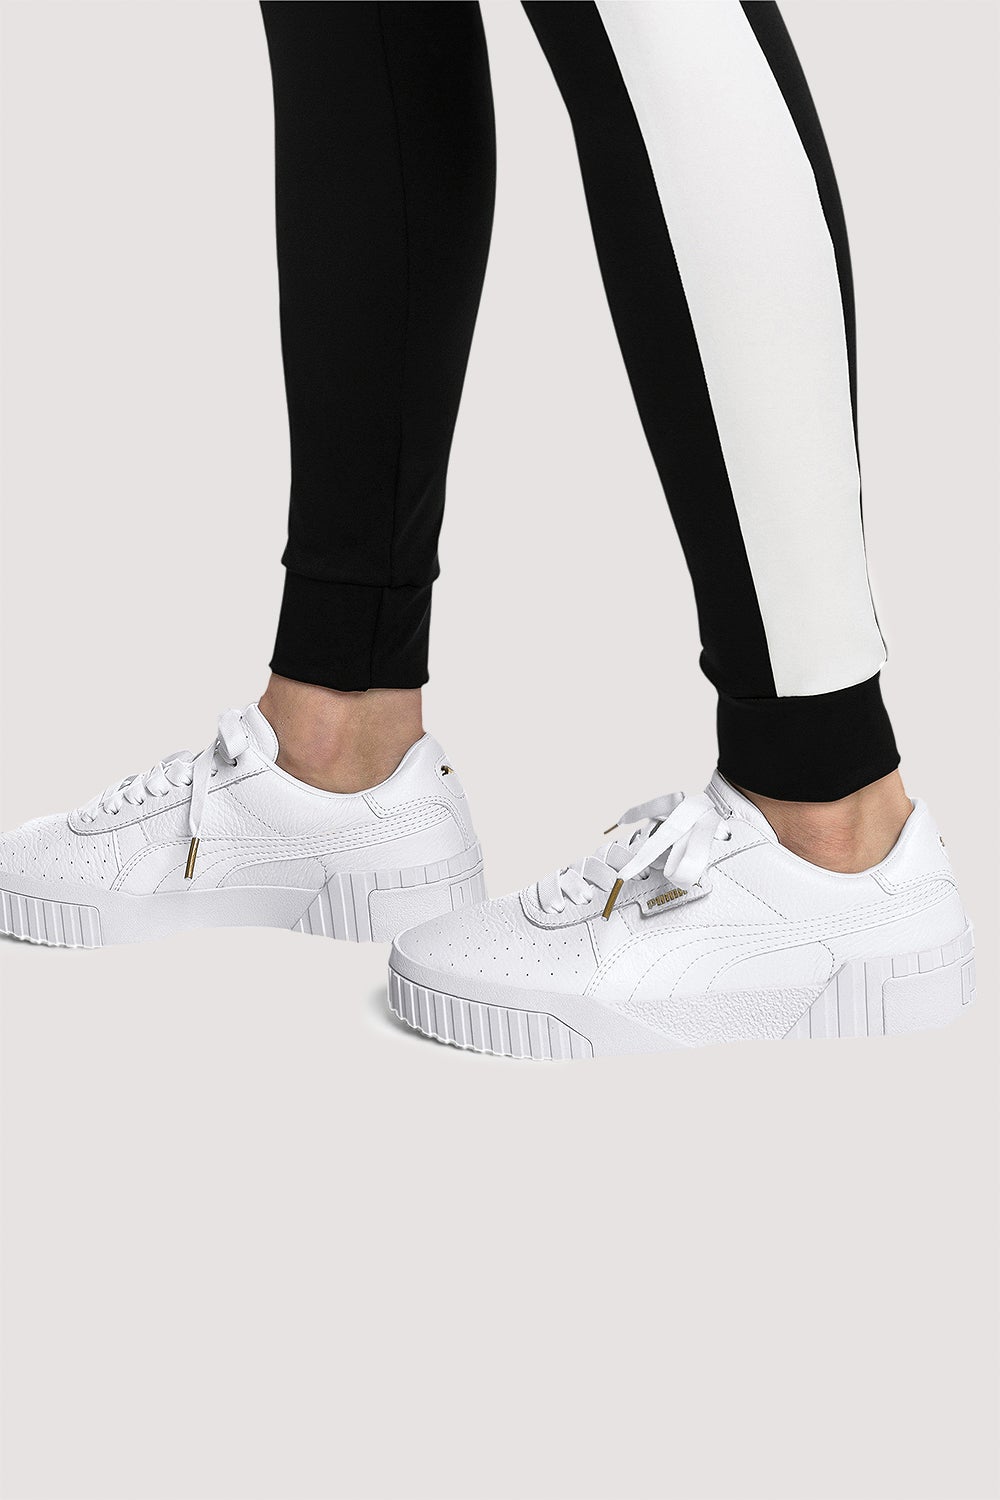 white puma cali shoes